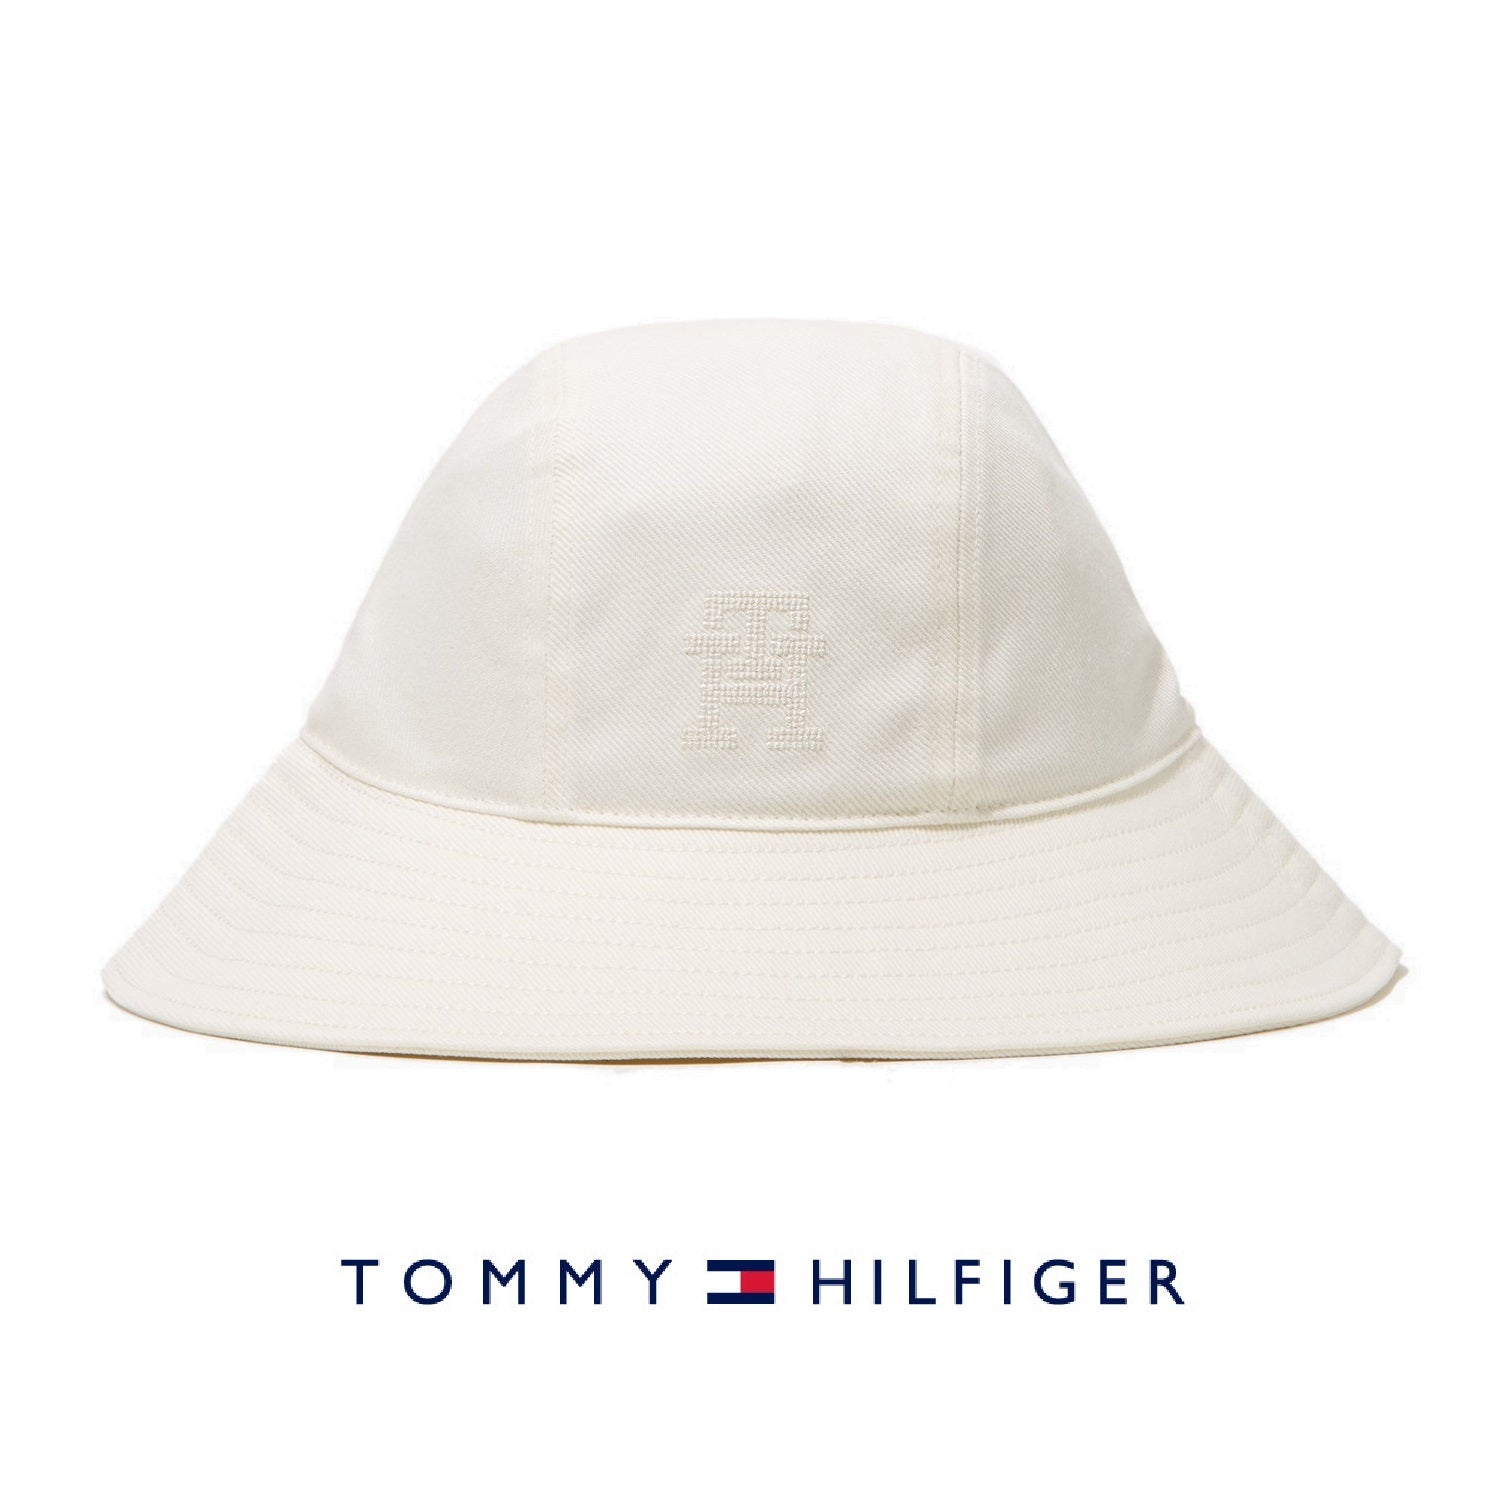 [Tommy Hilfiger] [Women's] Iconic Monogram Bucket Hat(T22D1AHT006WT1AC0) - コクモト KOCUMOTO